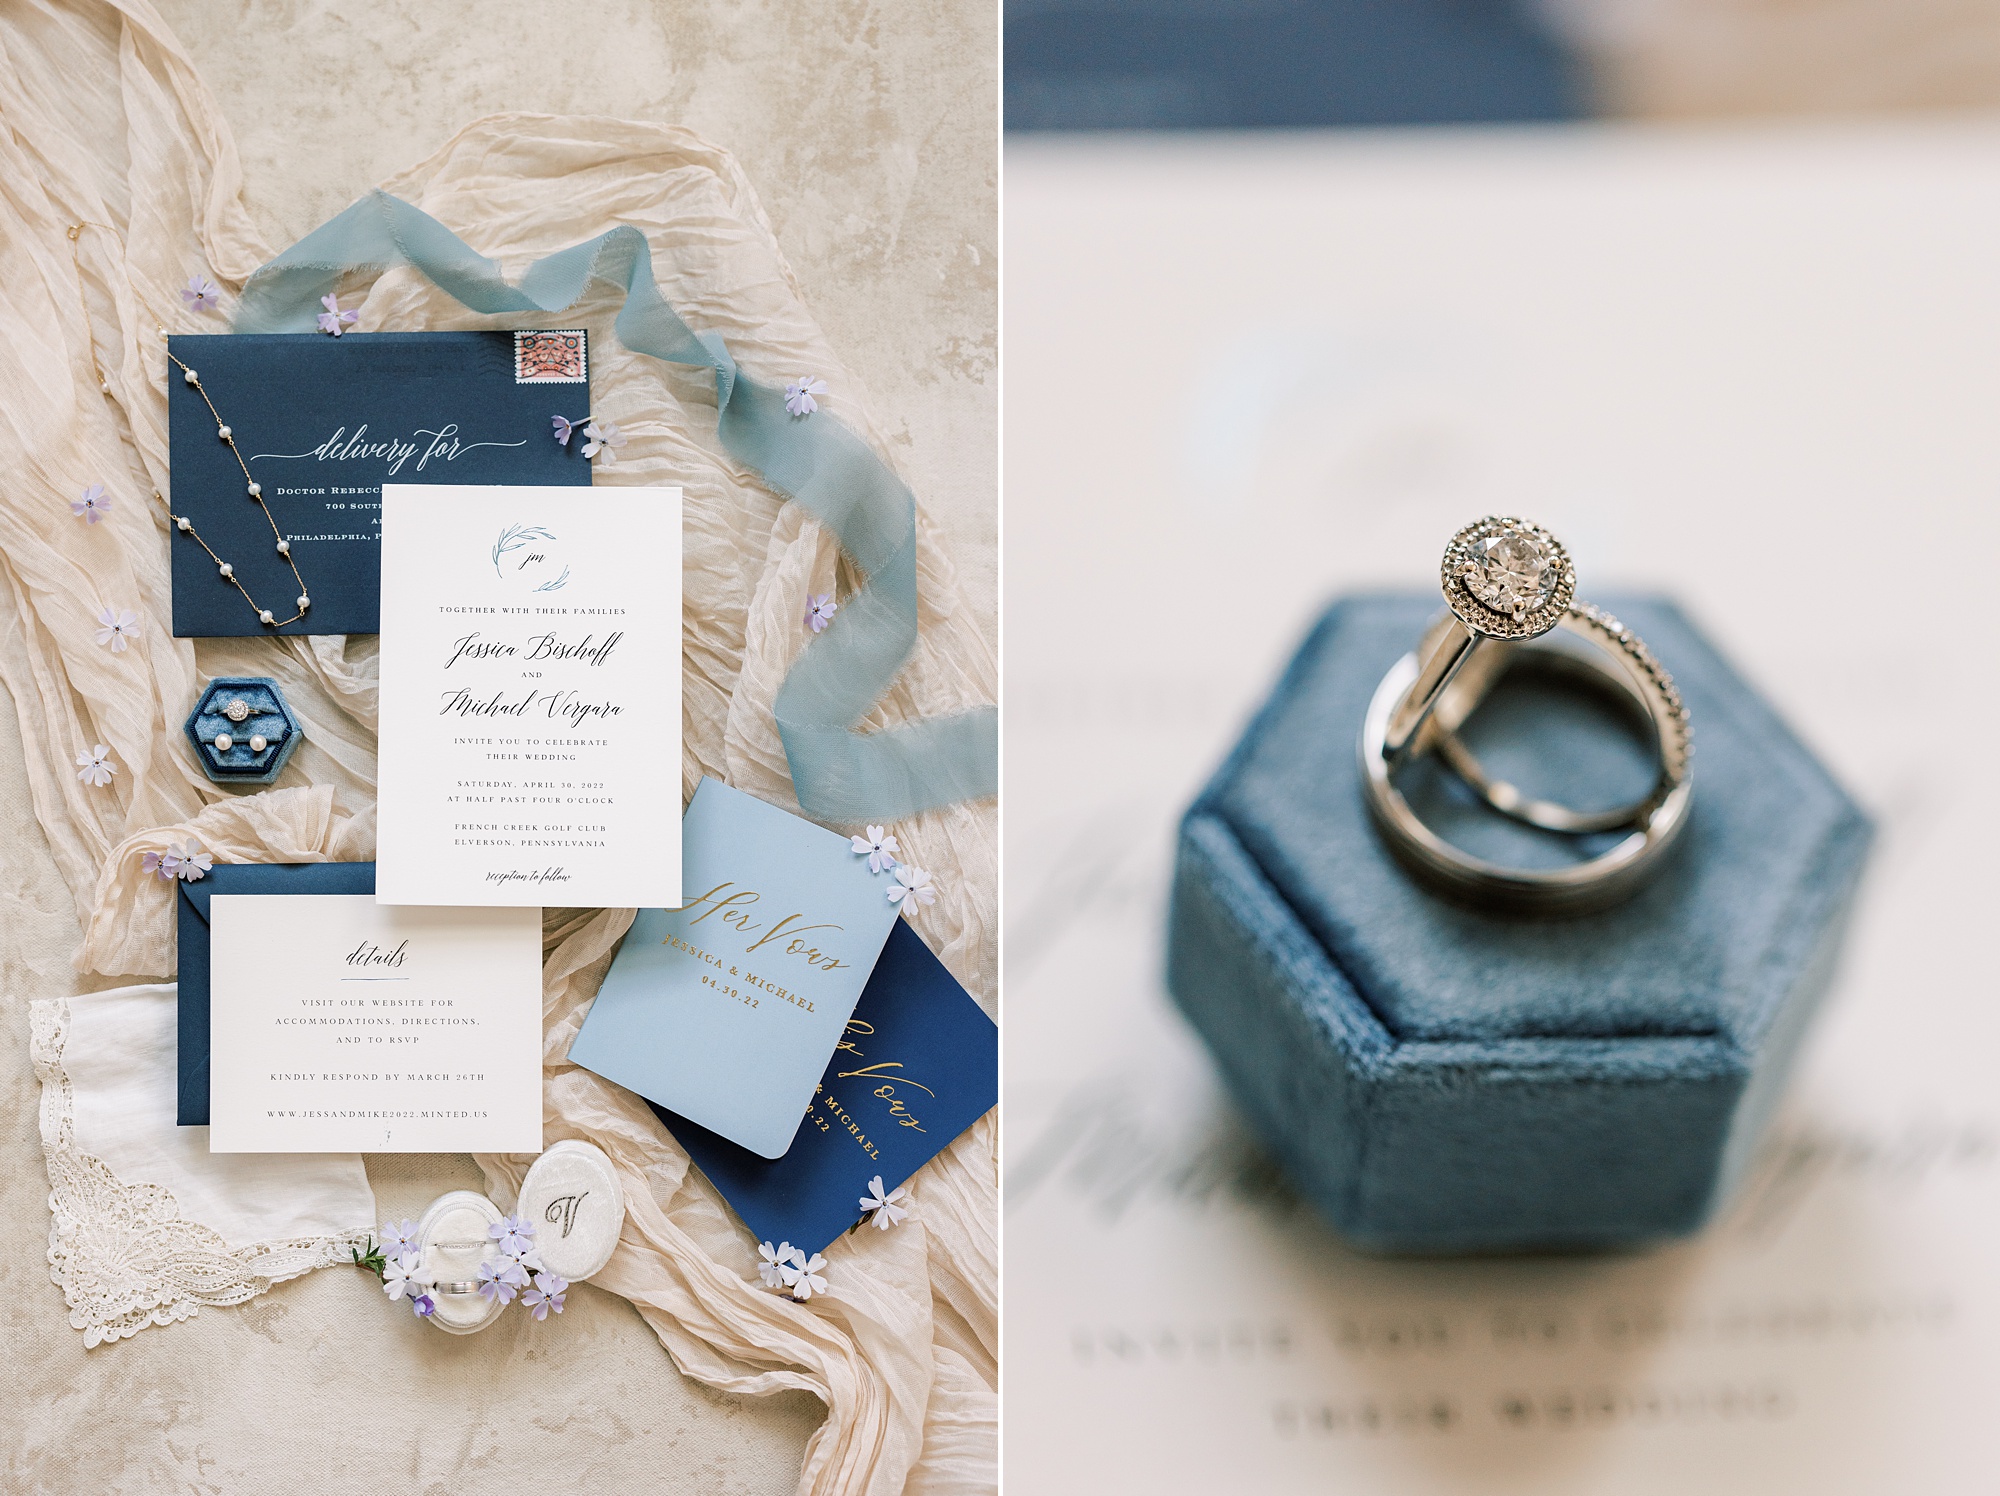 wedding rings rest n blue ring box